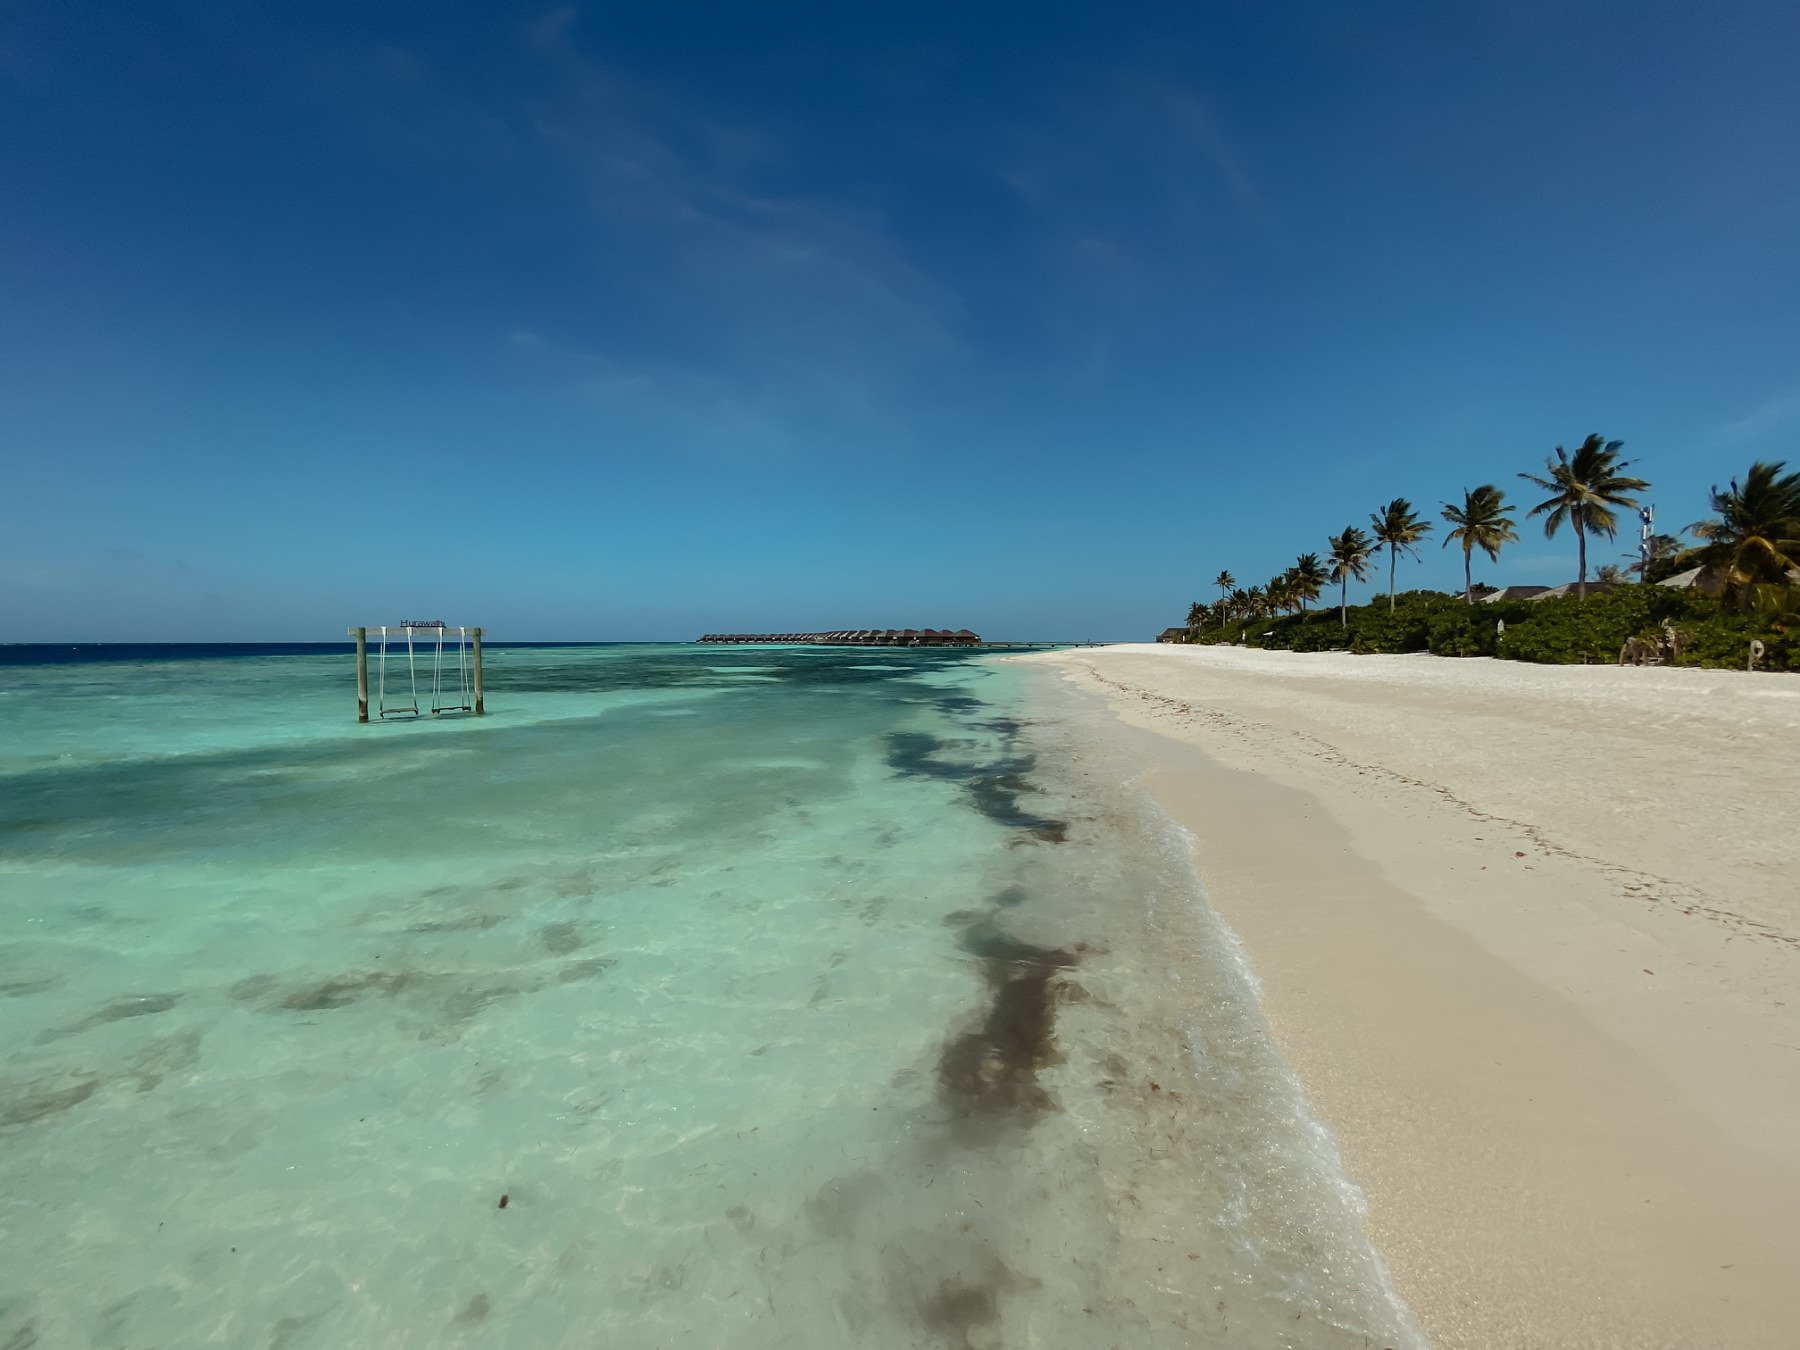 honeymoon advice hurawalhi island resort the maldives beach scene with swings over the ocean